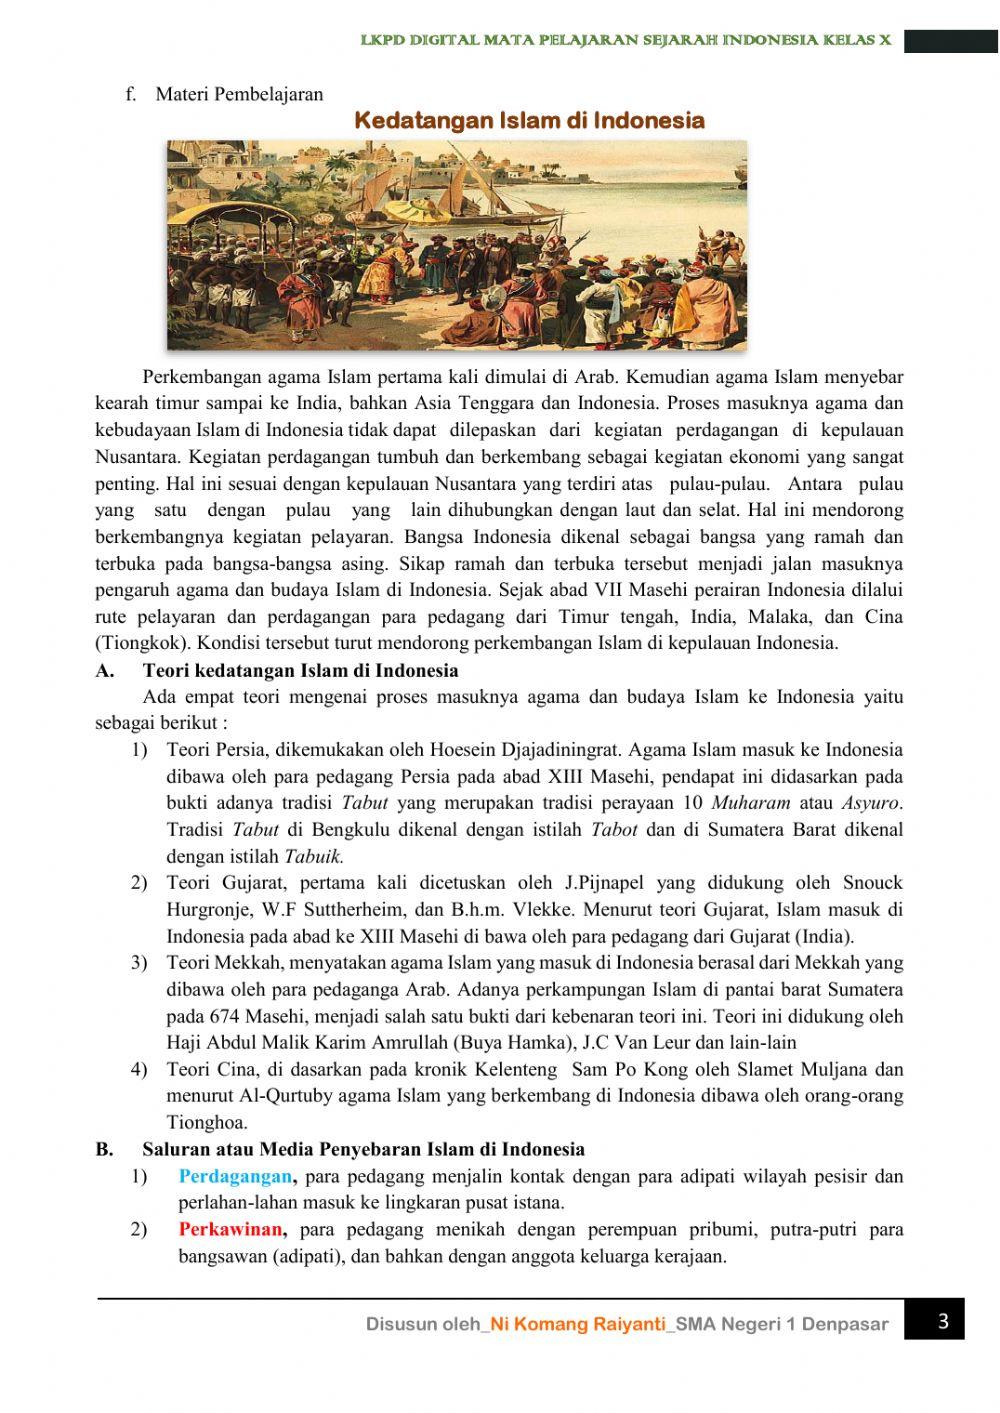 LKPD Digital Sejarah Indonesia-Kelas X-Kedatangan Islam di Indonesia